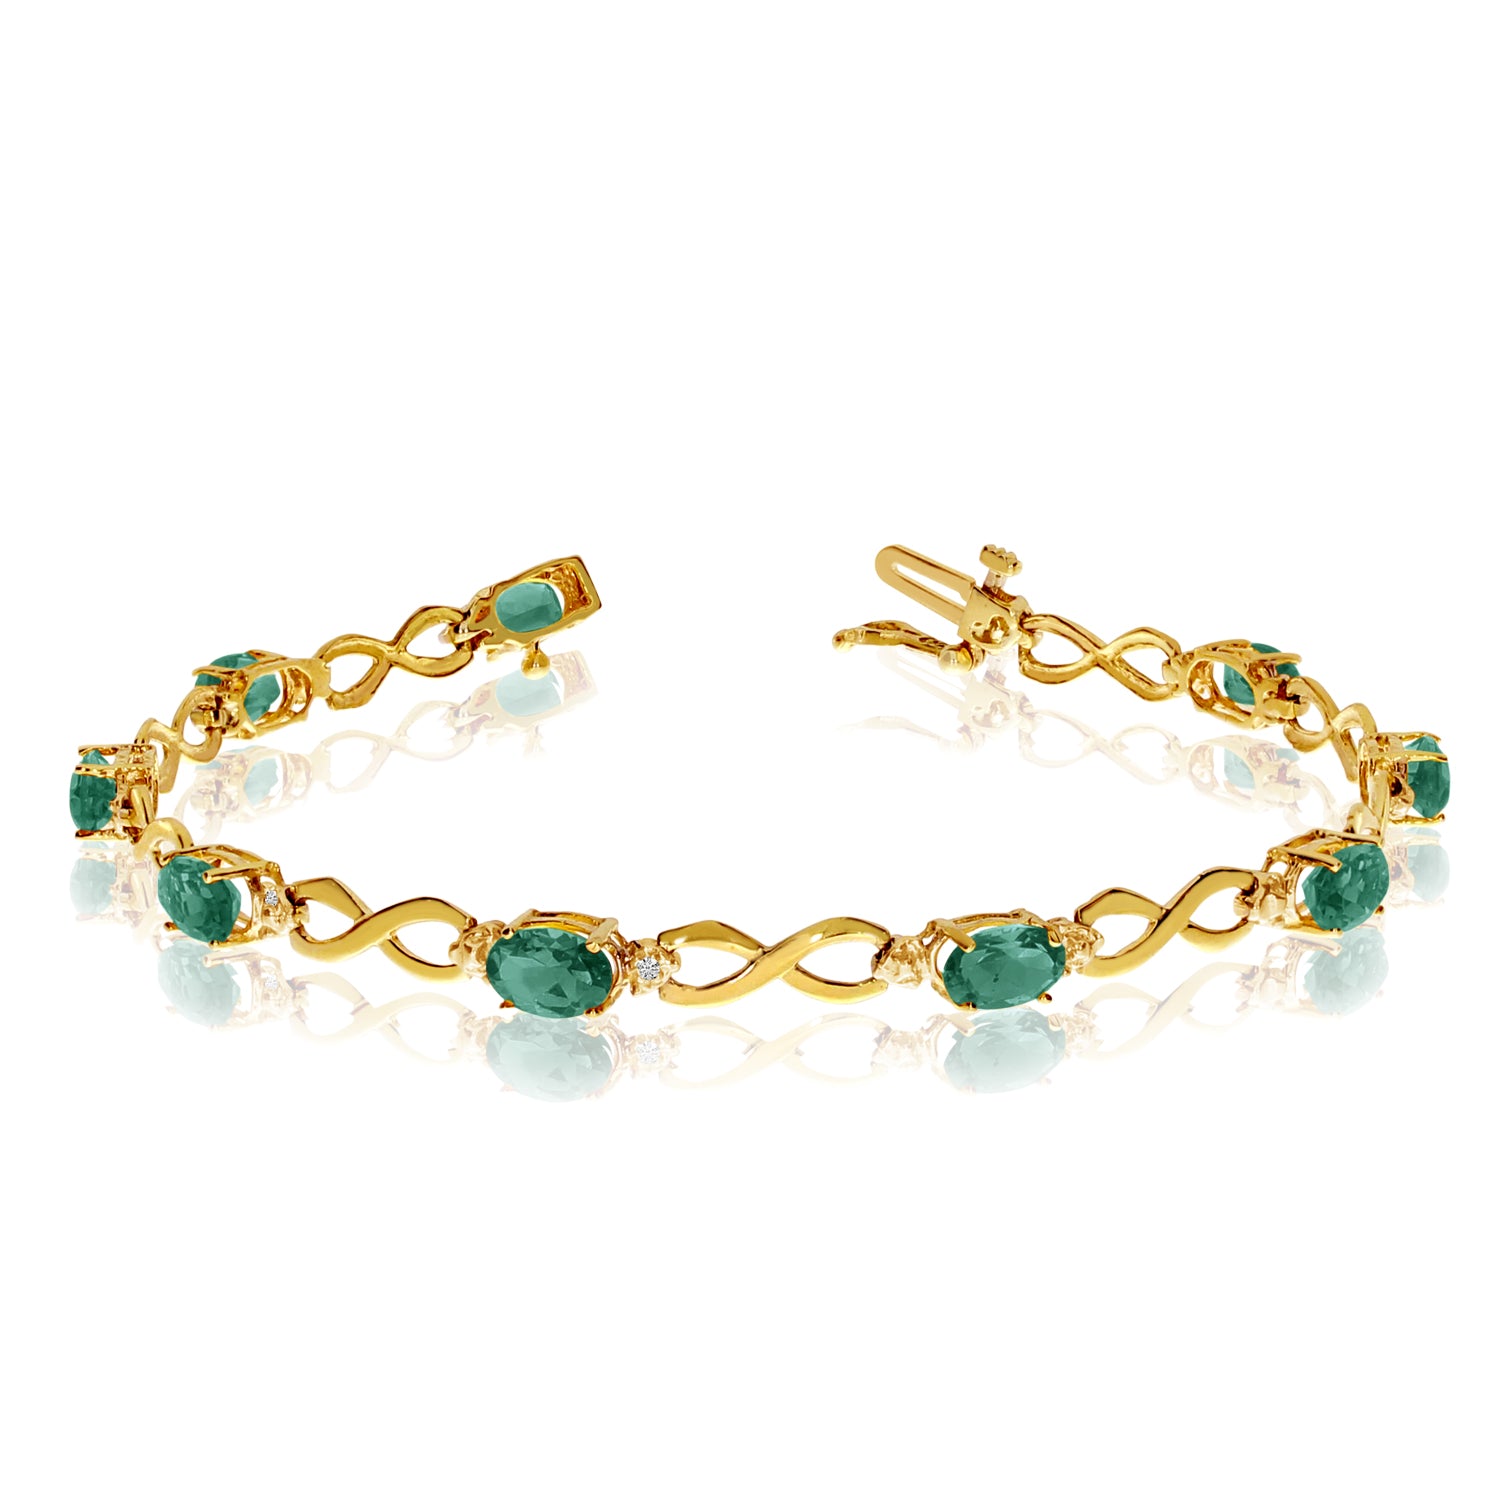 10K Yellow Gold Oval Emerald Stones And Diamonds Infinity Tennis Bracelet, 7" fine designer jewelry for men and women